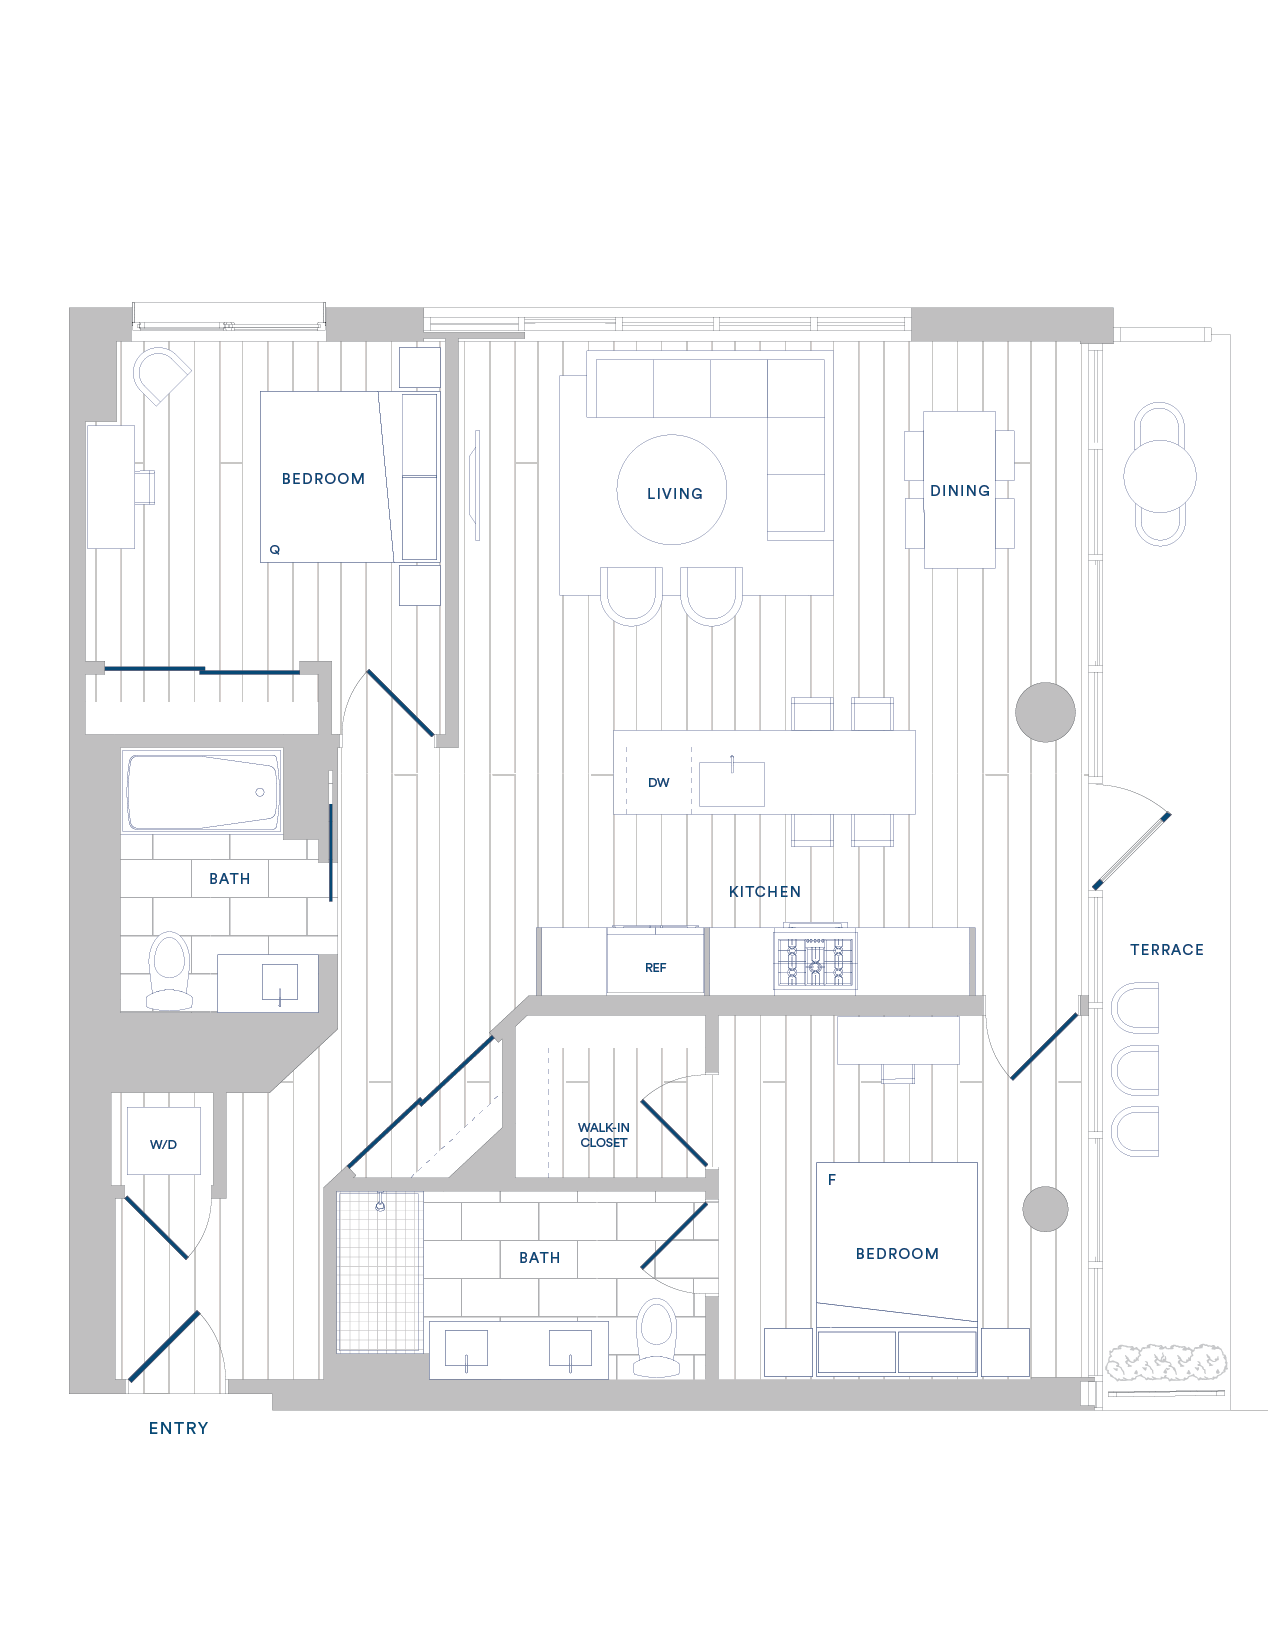 Floorplan for Apartment #1312, 2 bedroom unit at Margarite